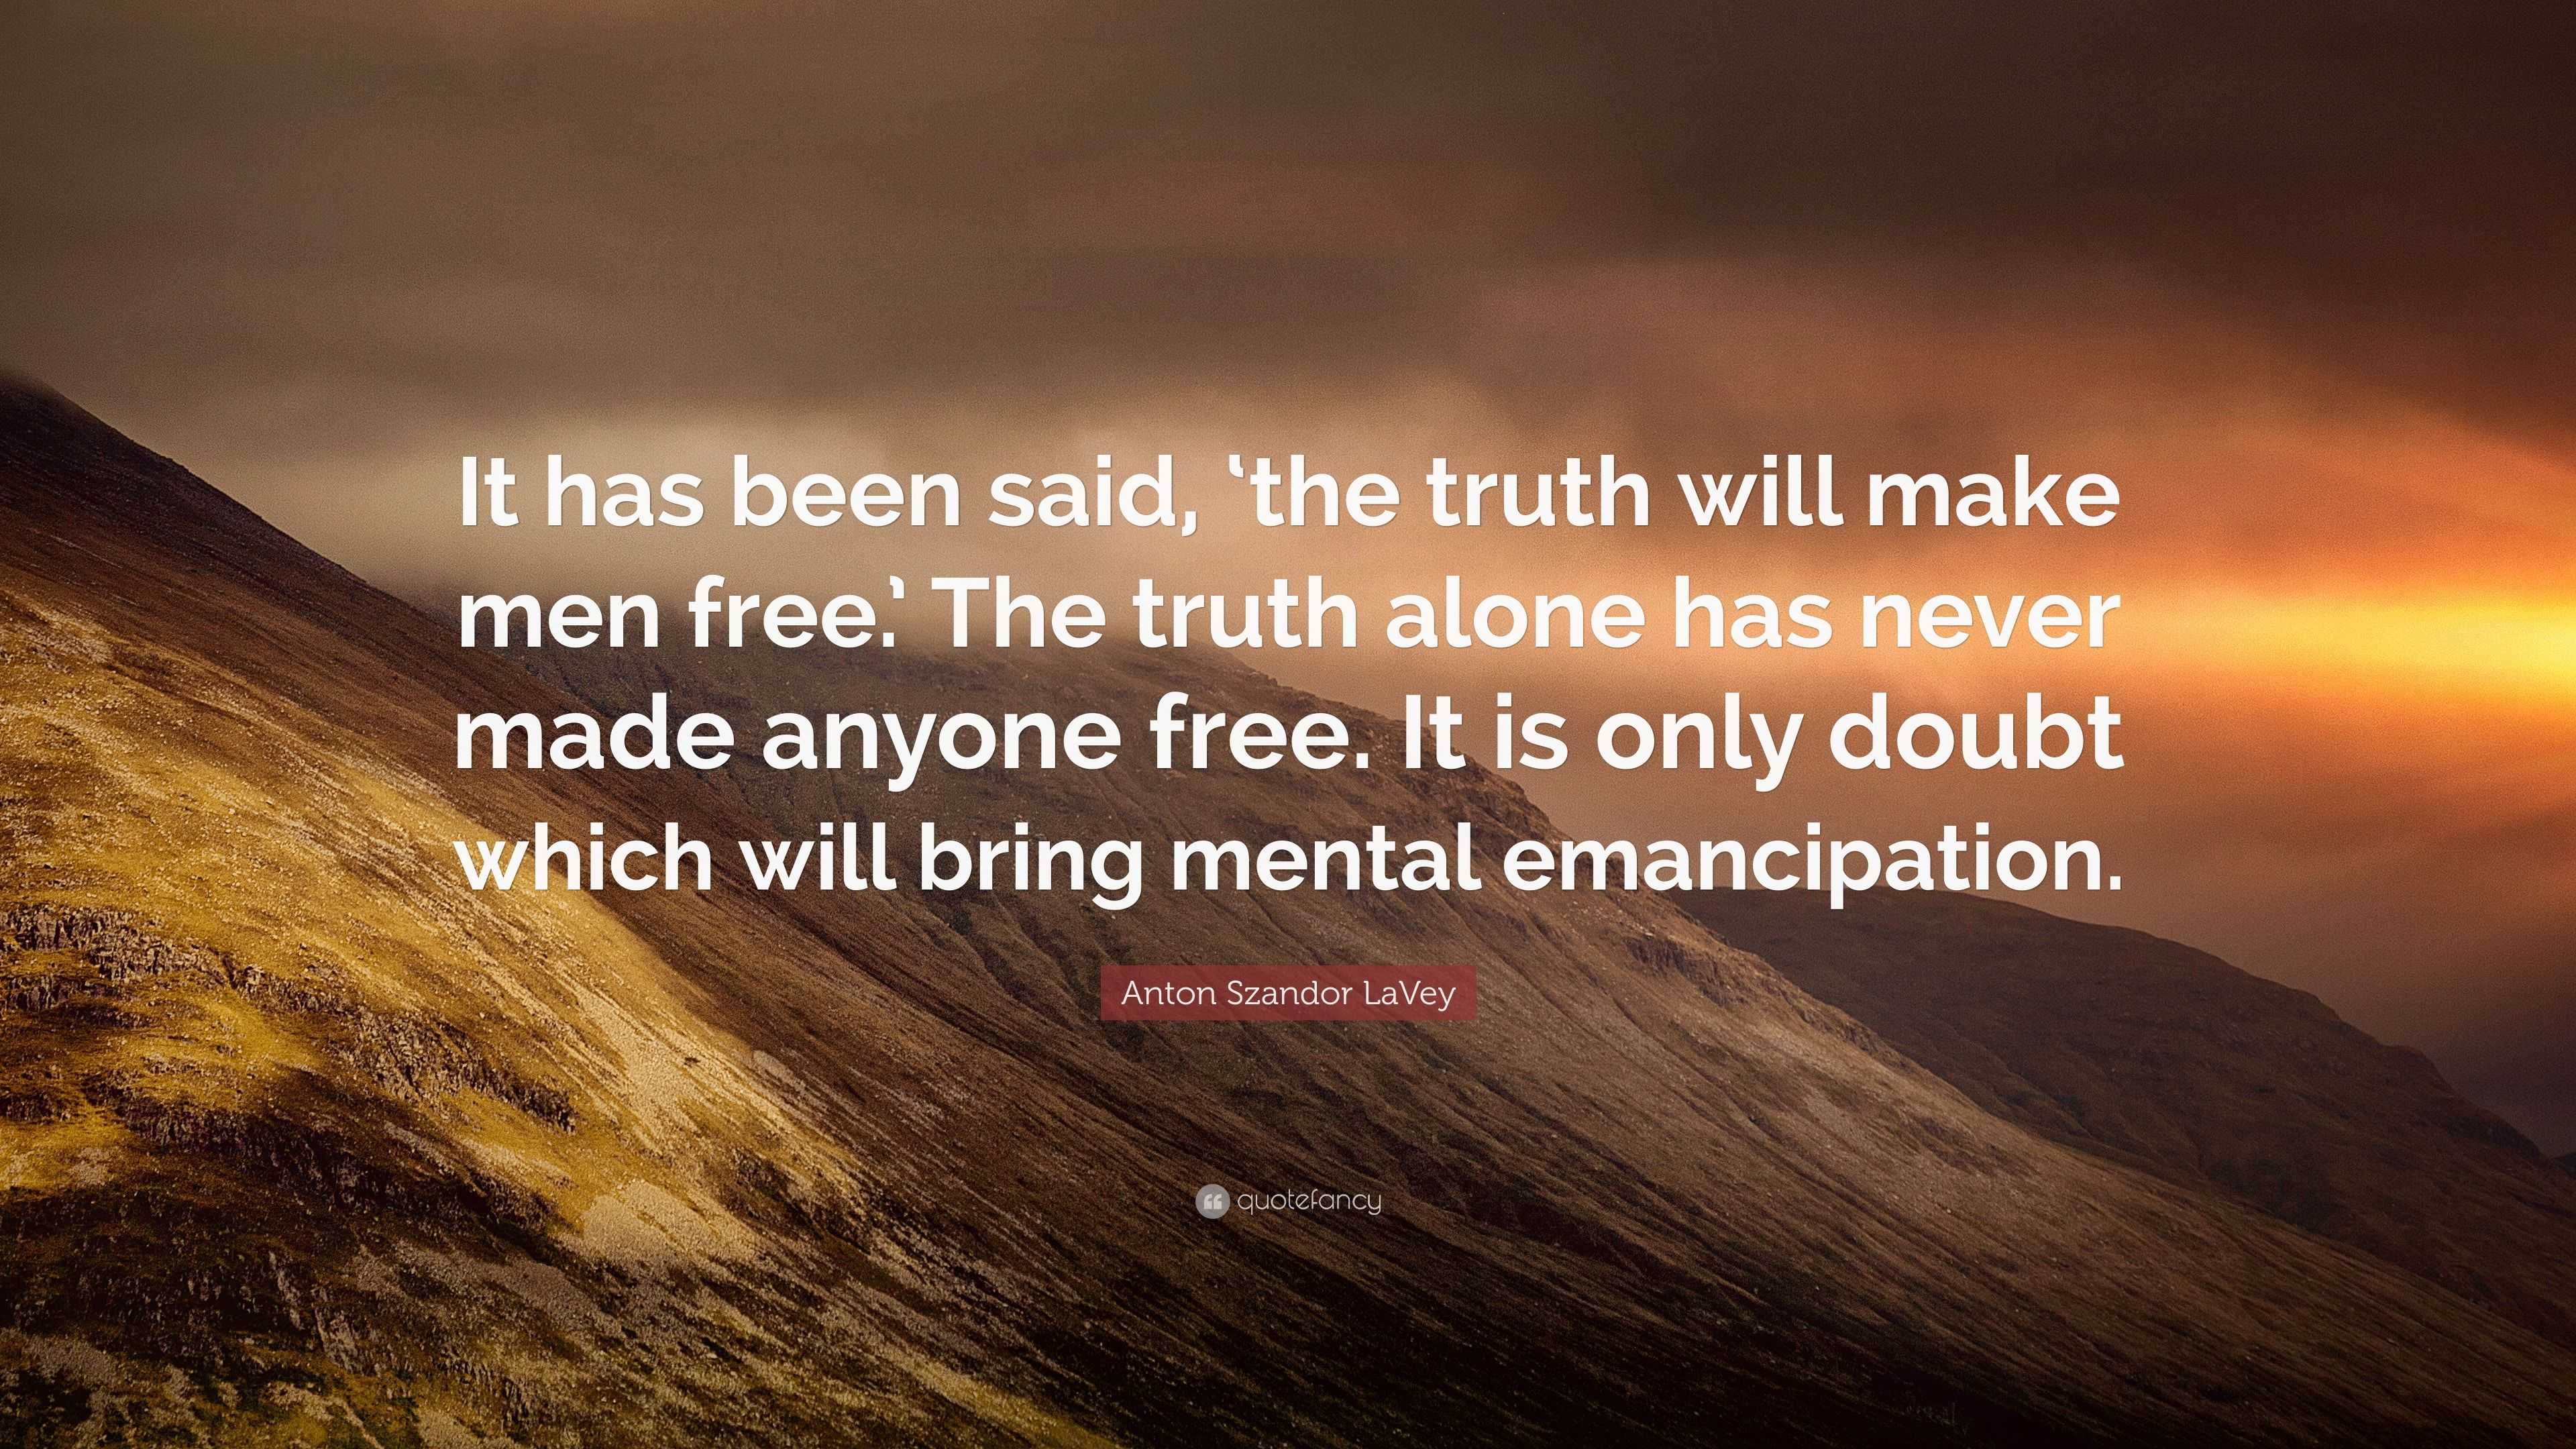 Anton Szandor LaVey Quote: “It has been said, ‘the truth will make men ...